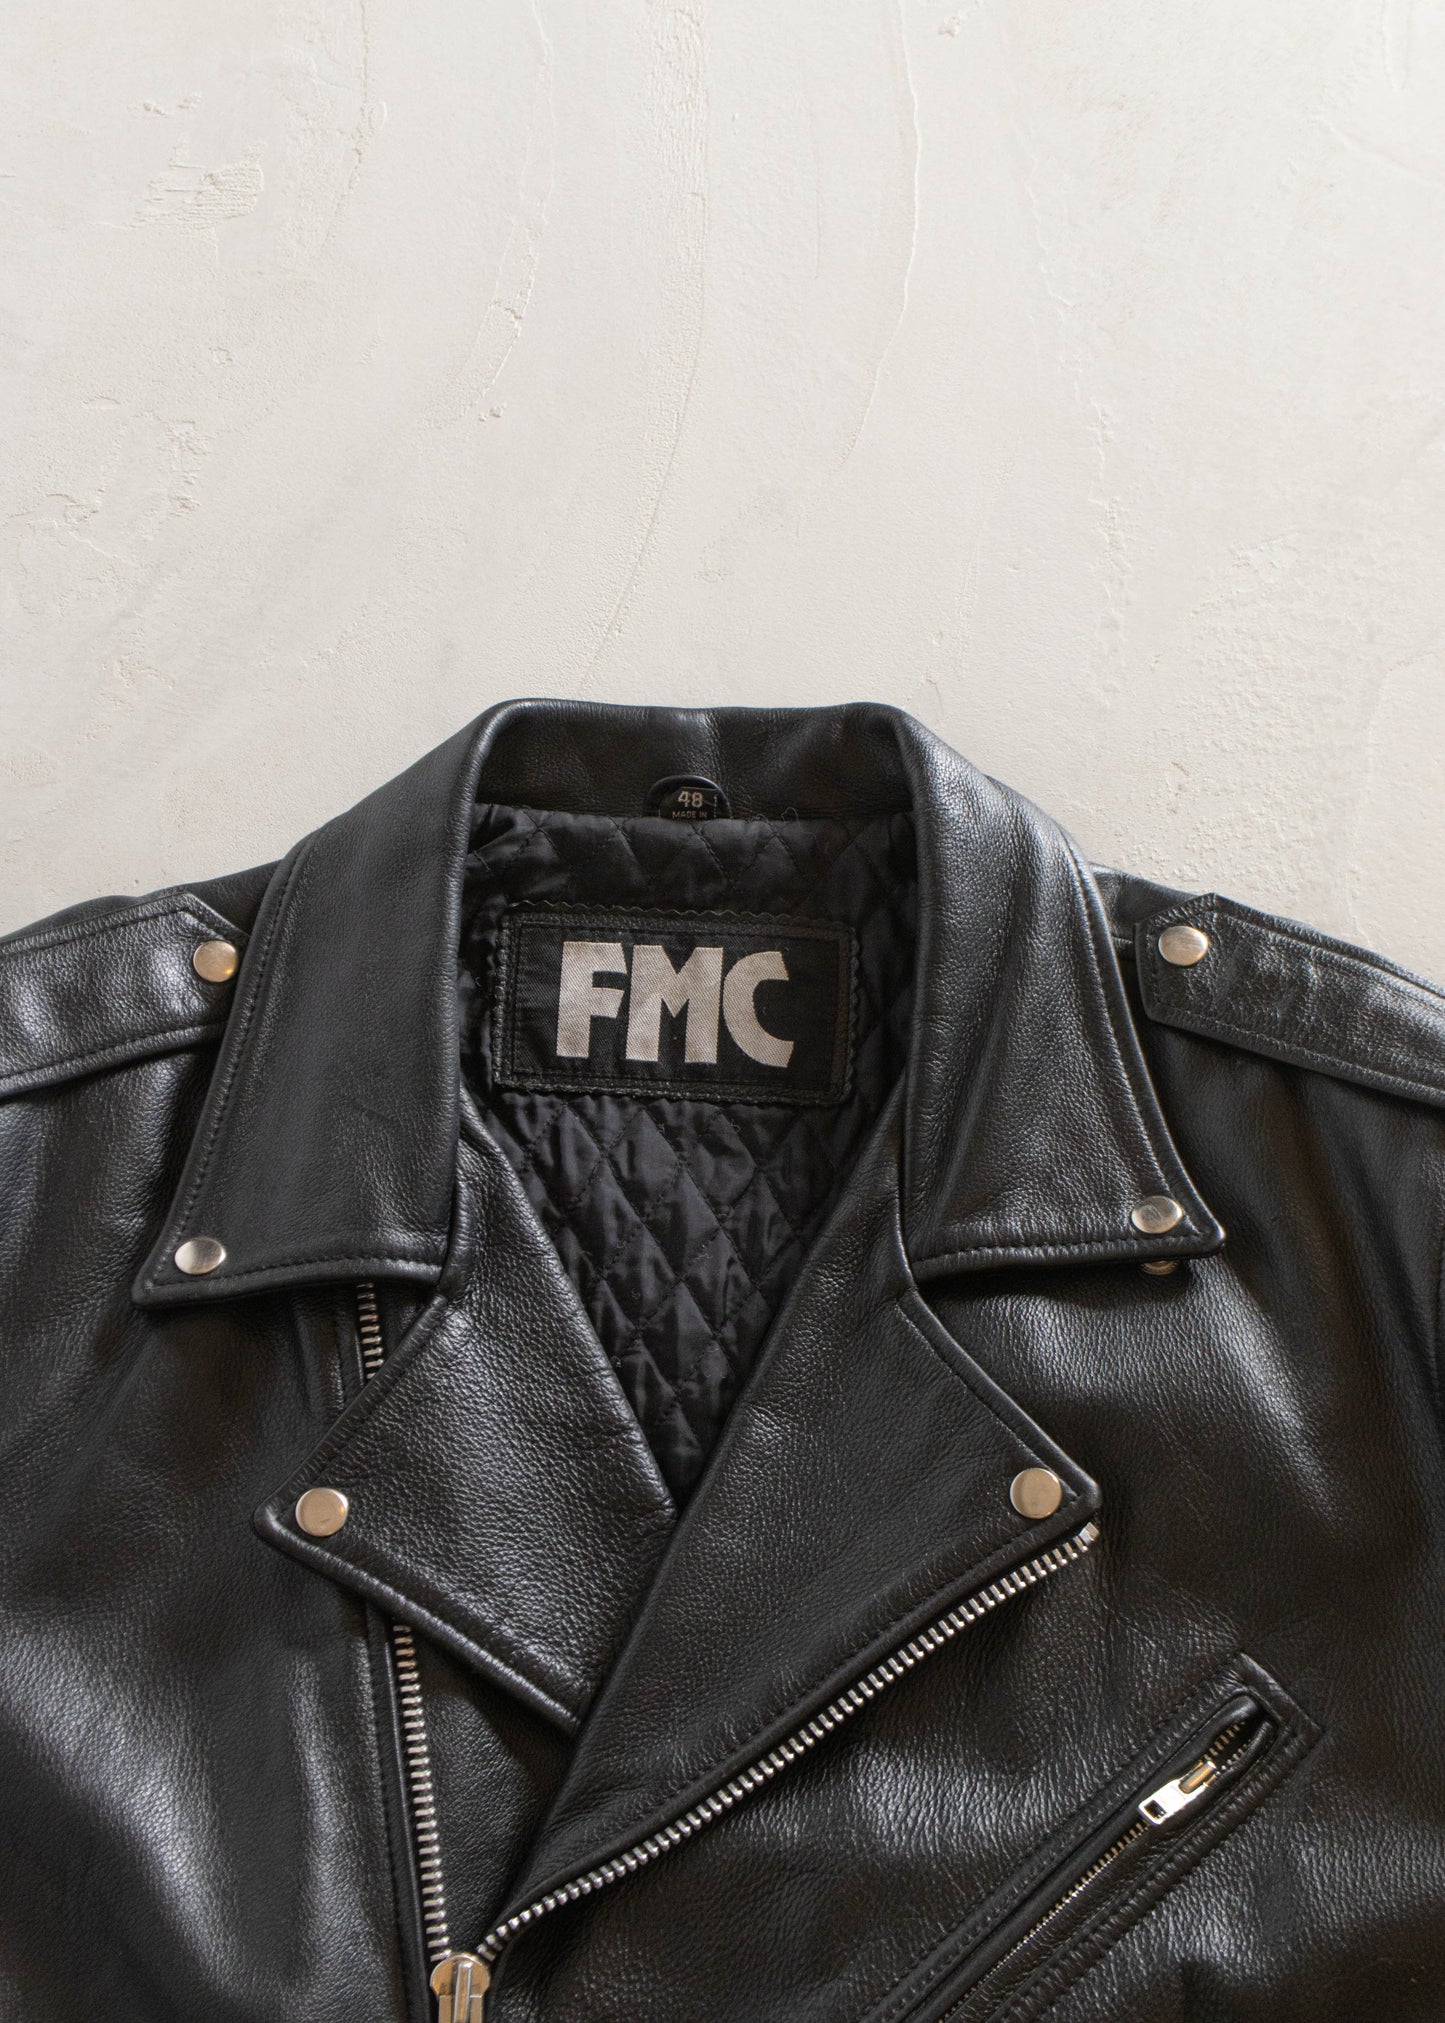 1980s FMC Leather Moto Jacket Size L/XL